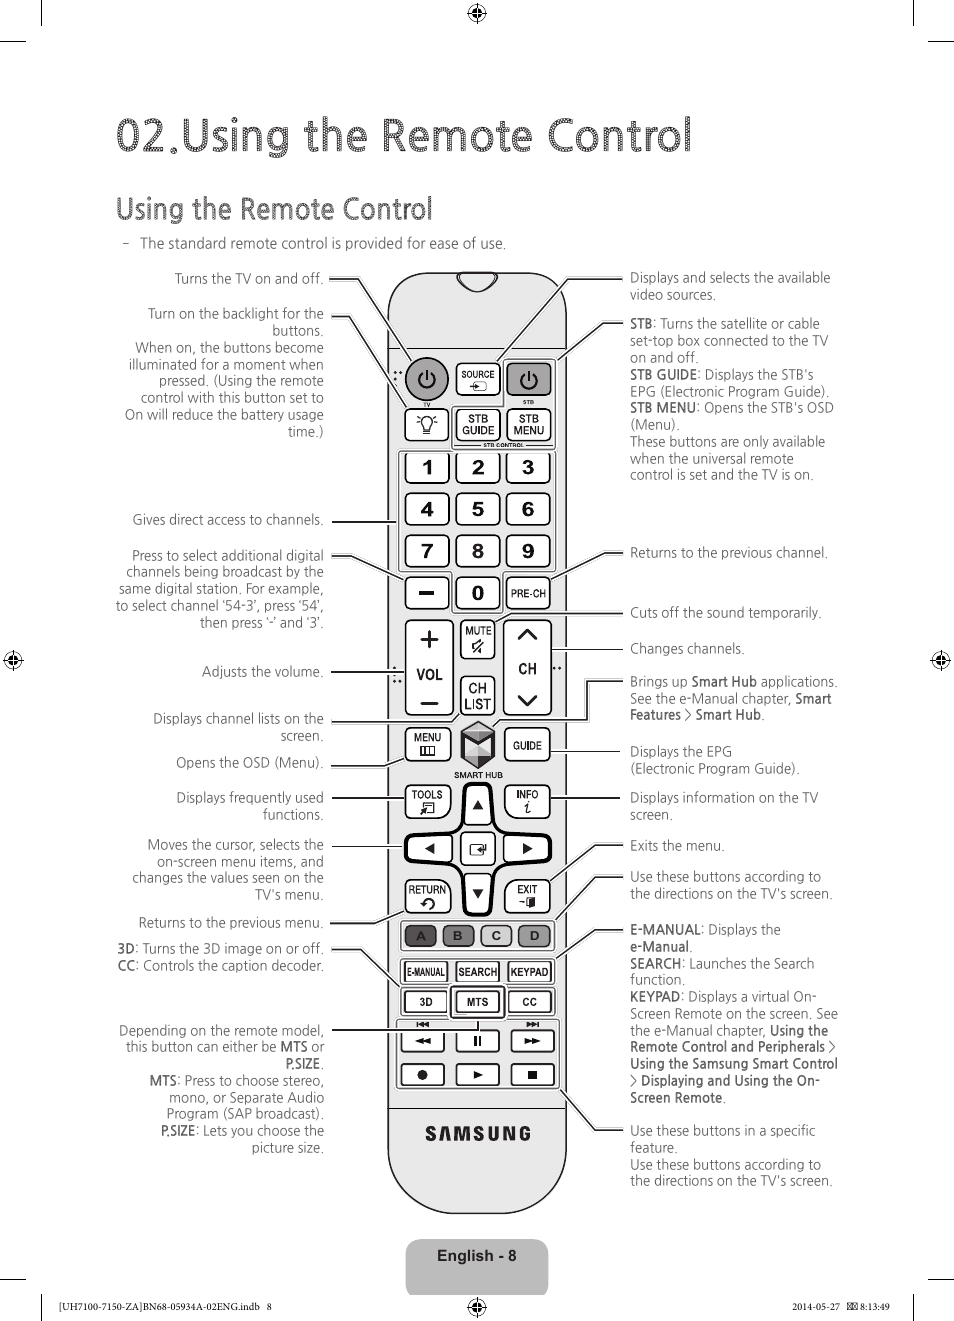 Using the remote control | Samsung UN55H7150AFXZA User Manual | Page 8